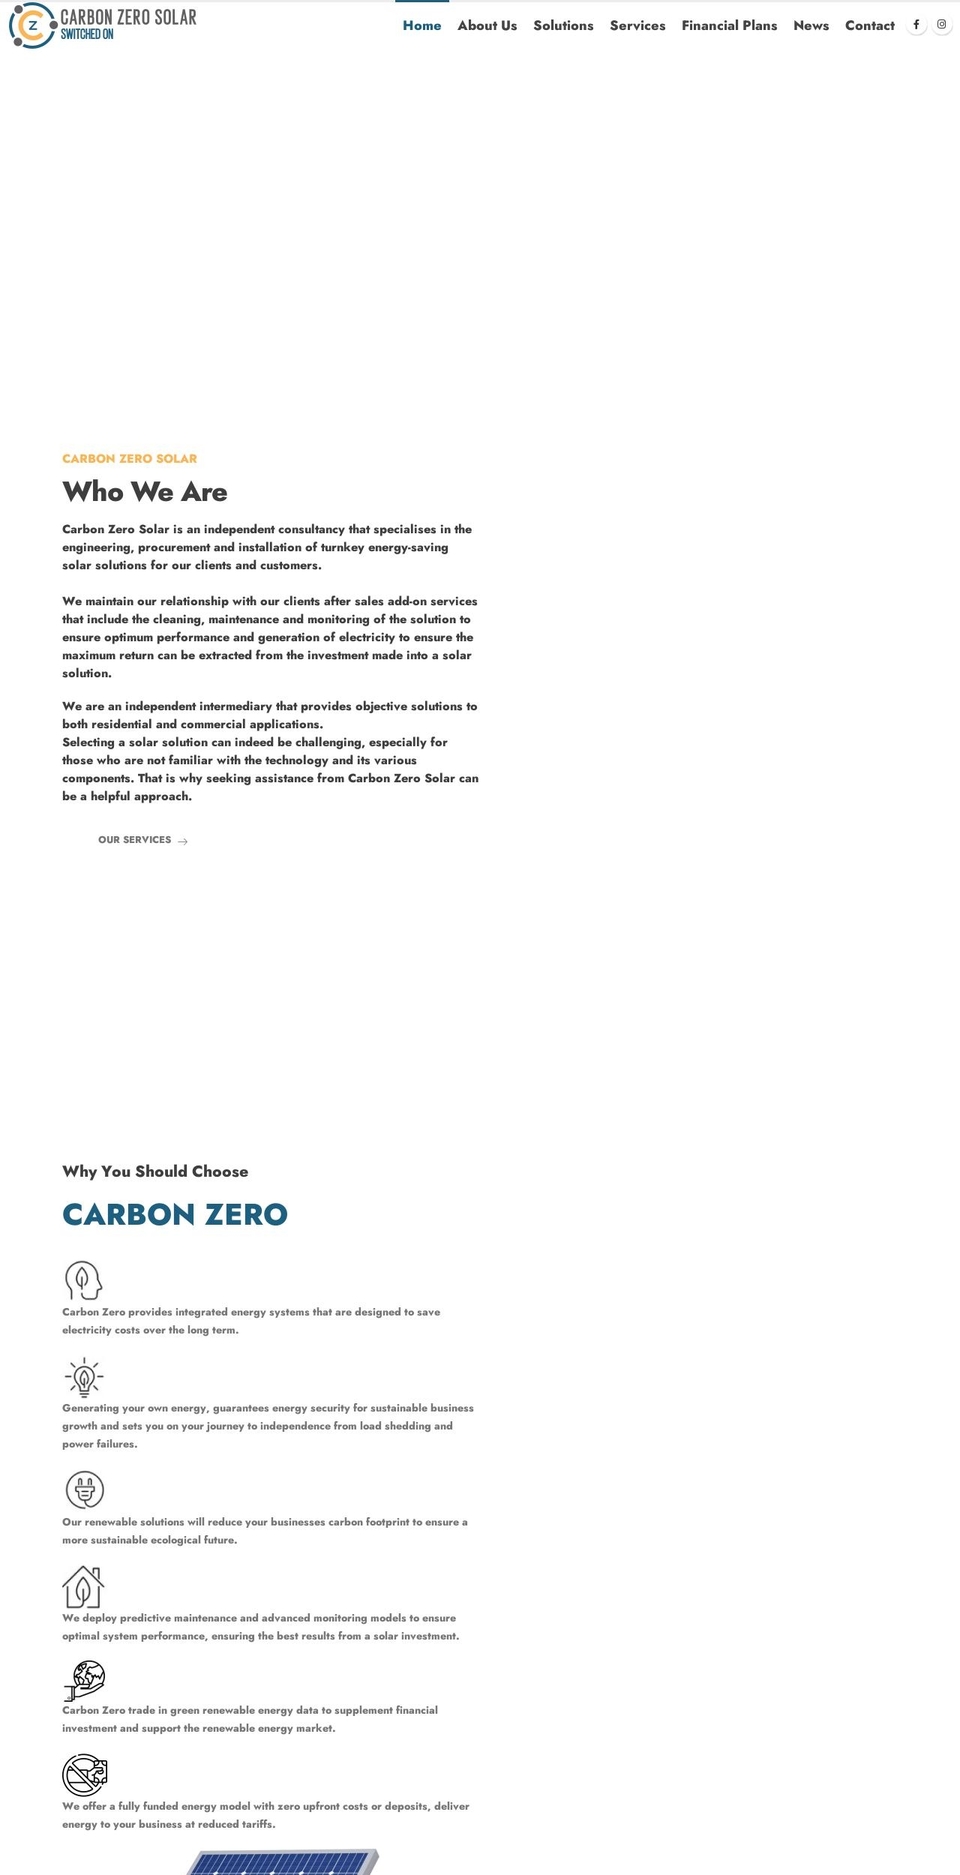 carbonzero.solar shopify website screenshot